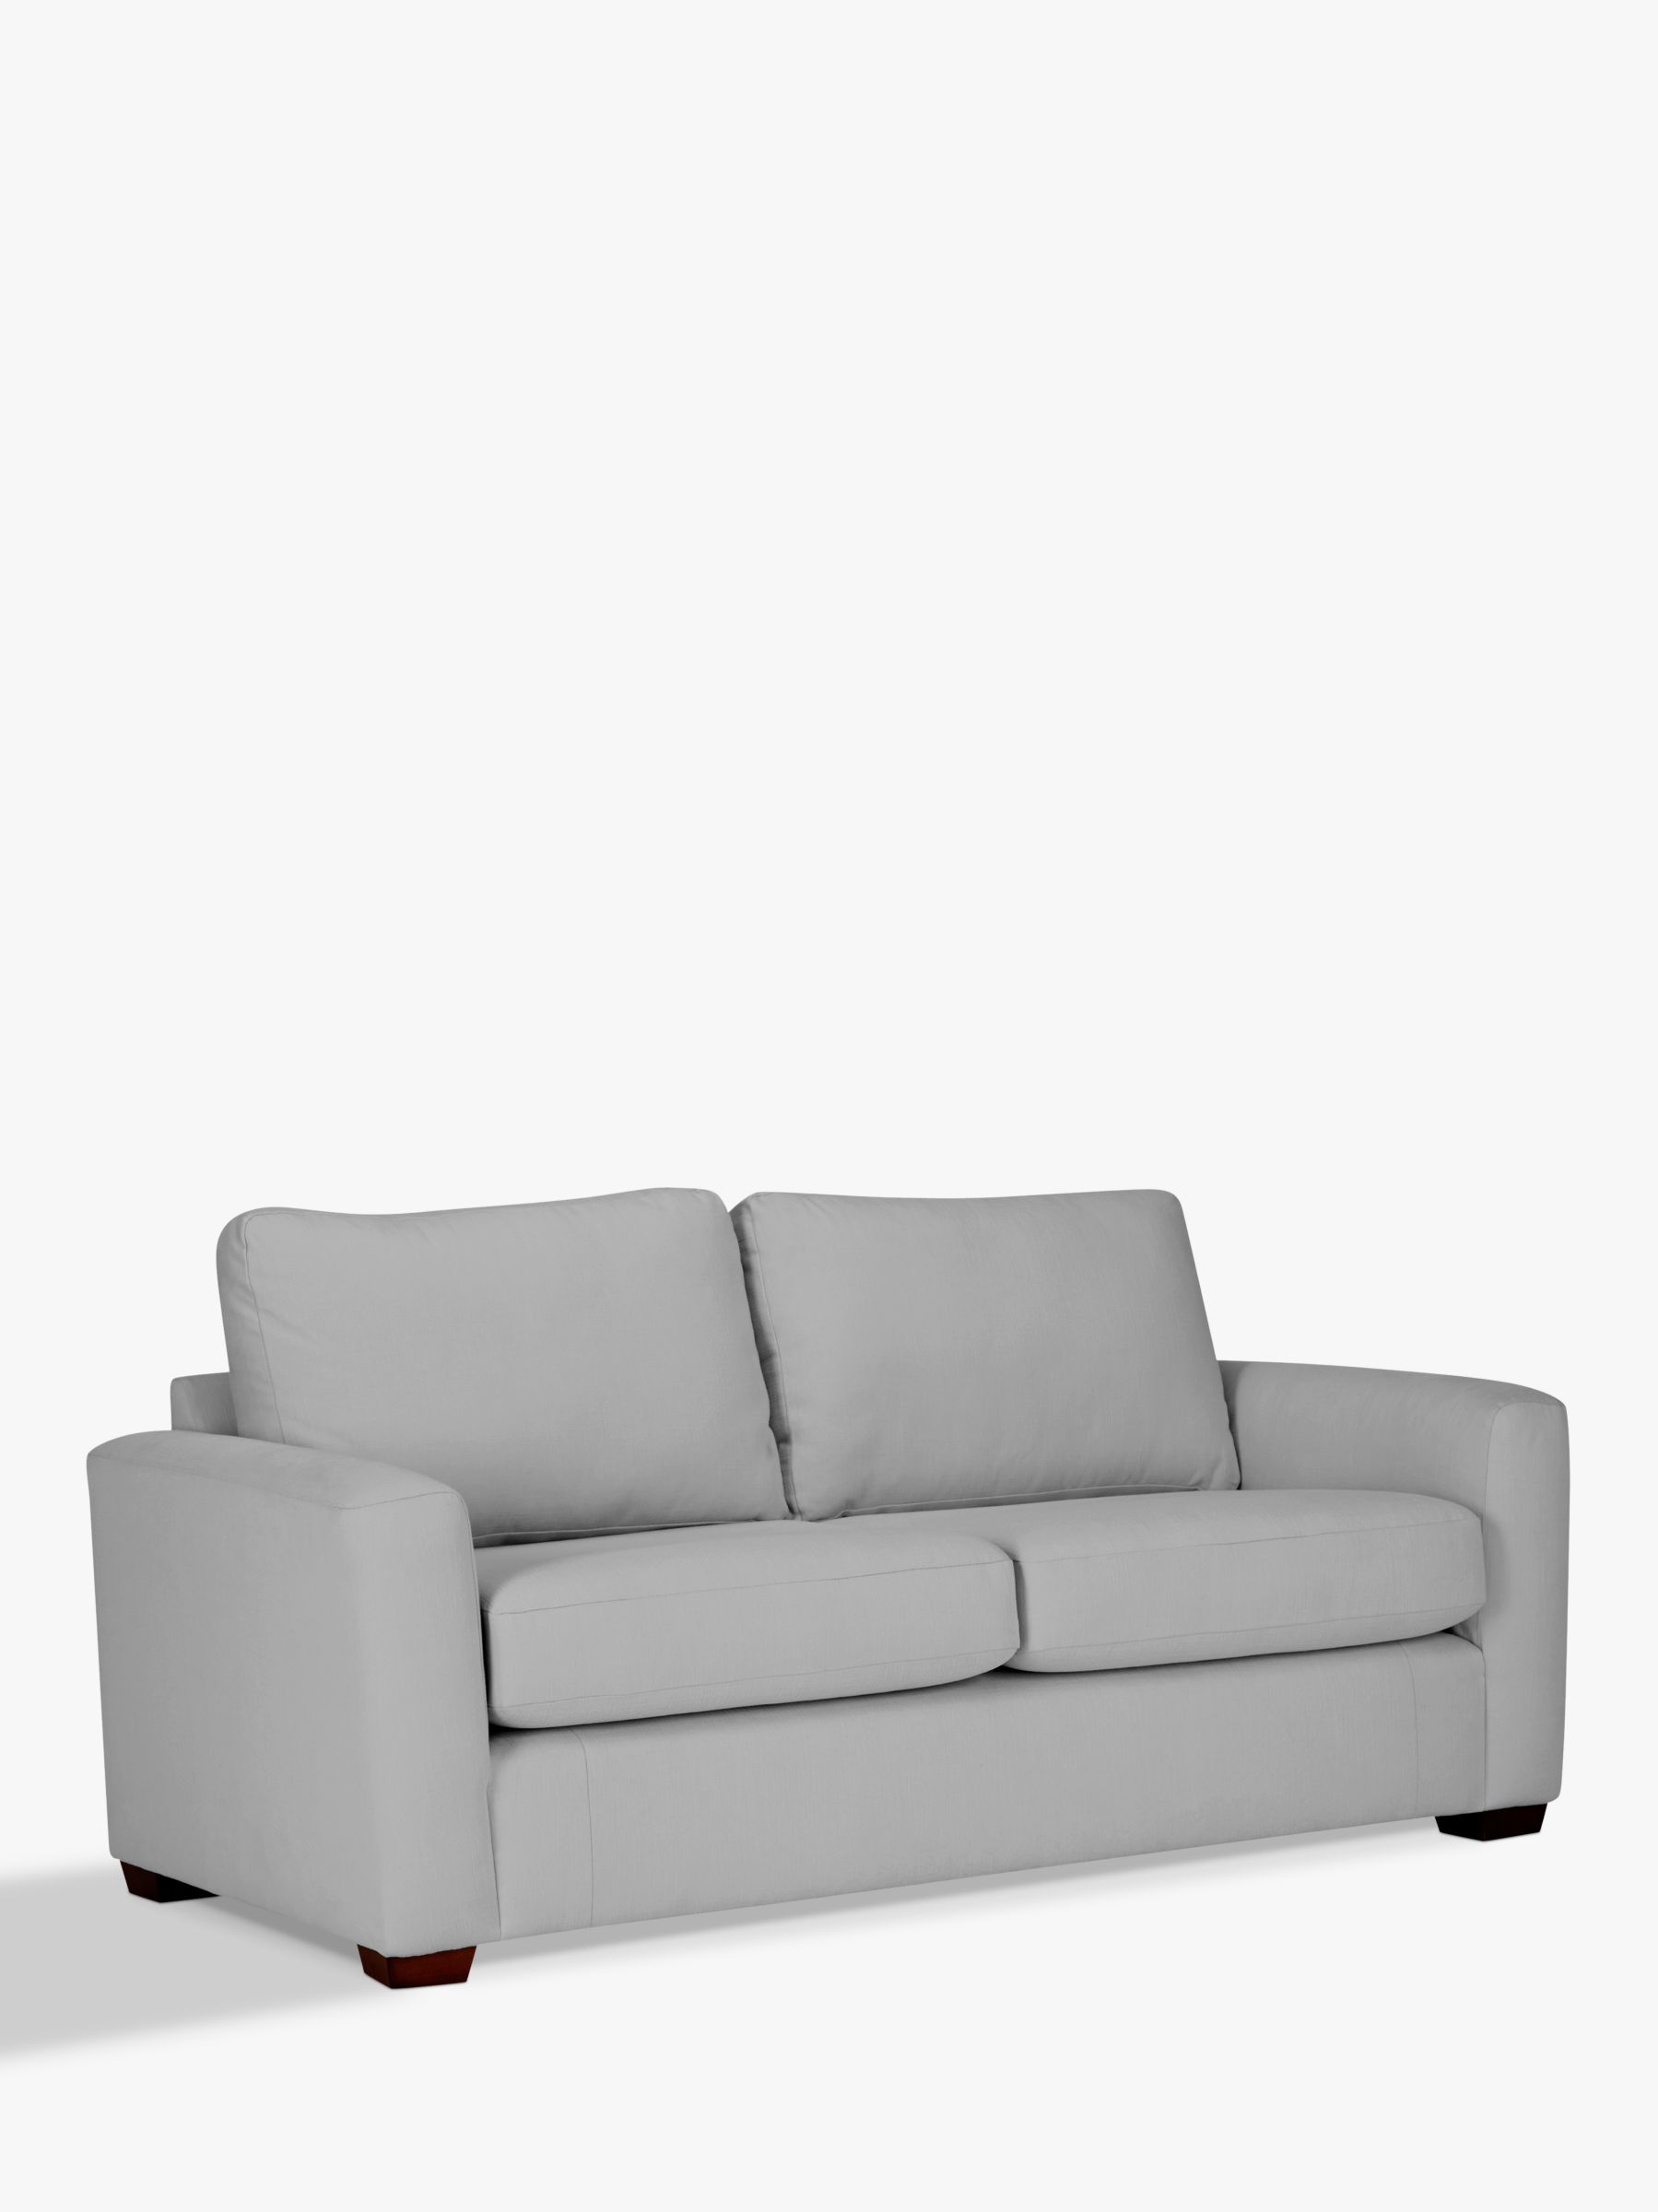 Photo of John lewis oliver medium 2 seater sofa